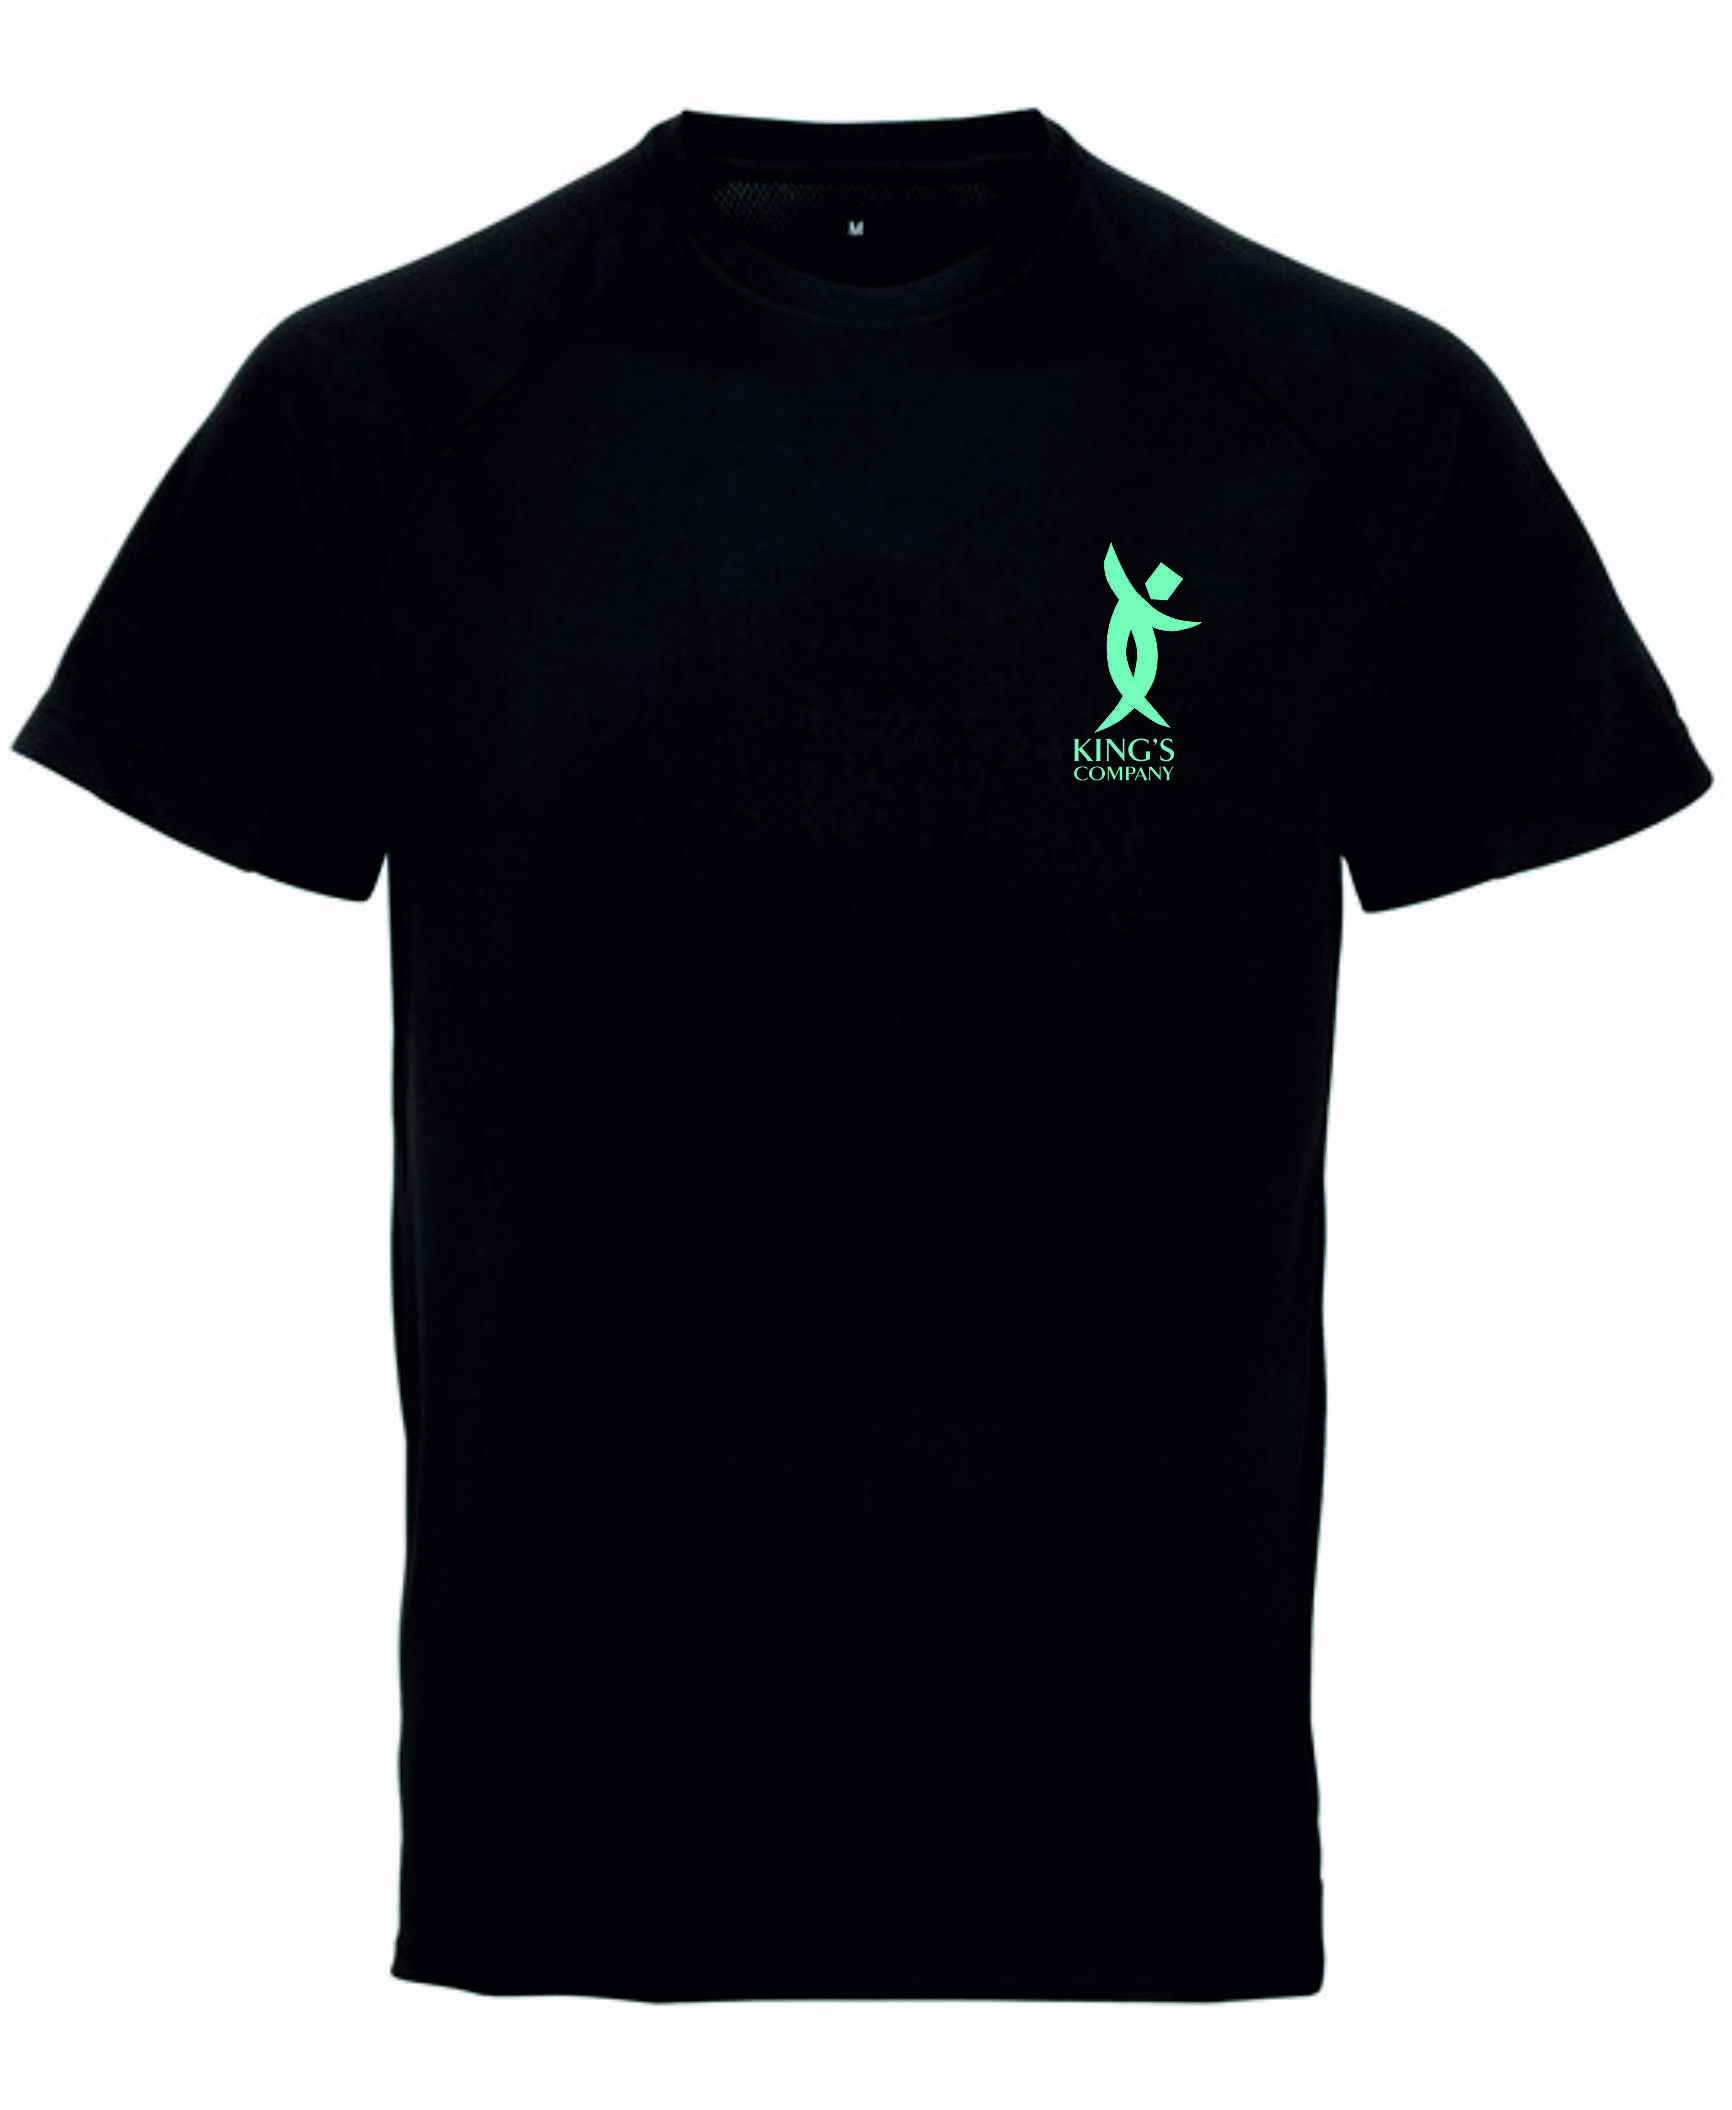 King's Company - Technical Tshirt